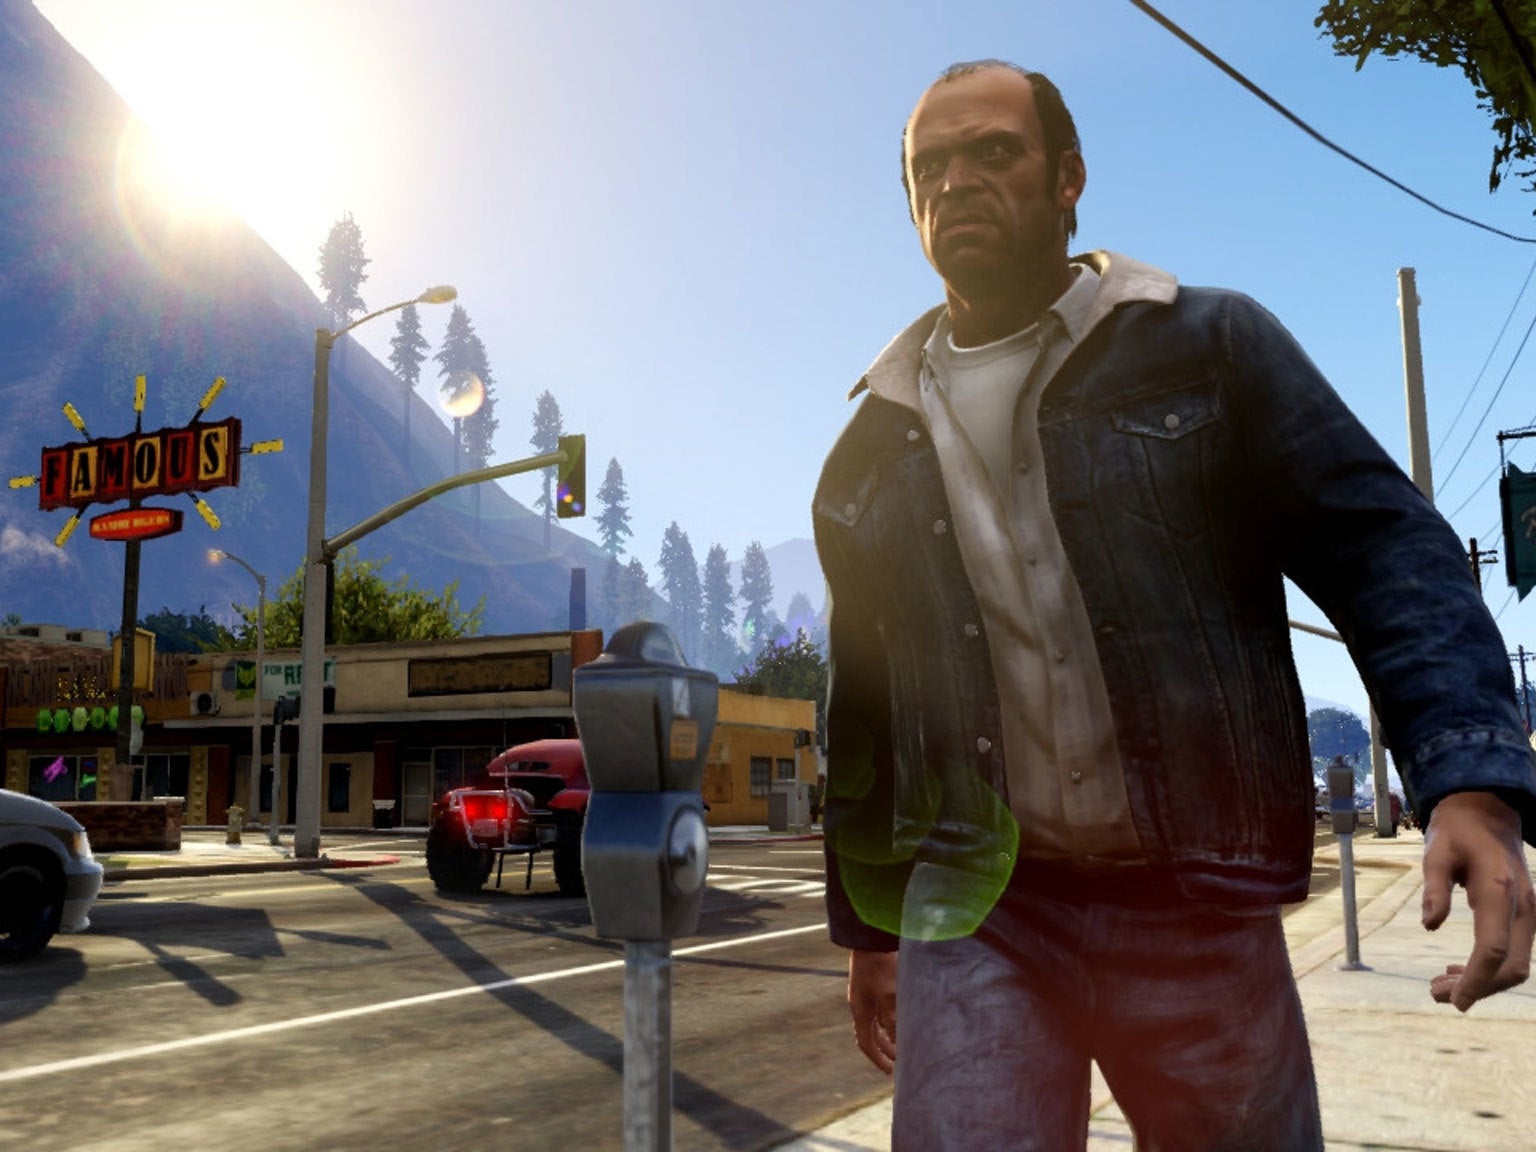 Grand Theft Auto V (US)